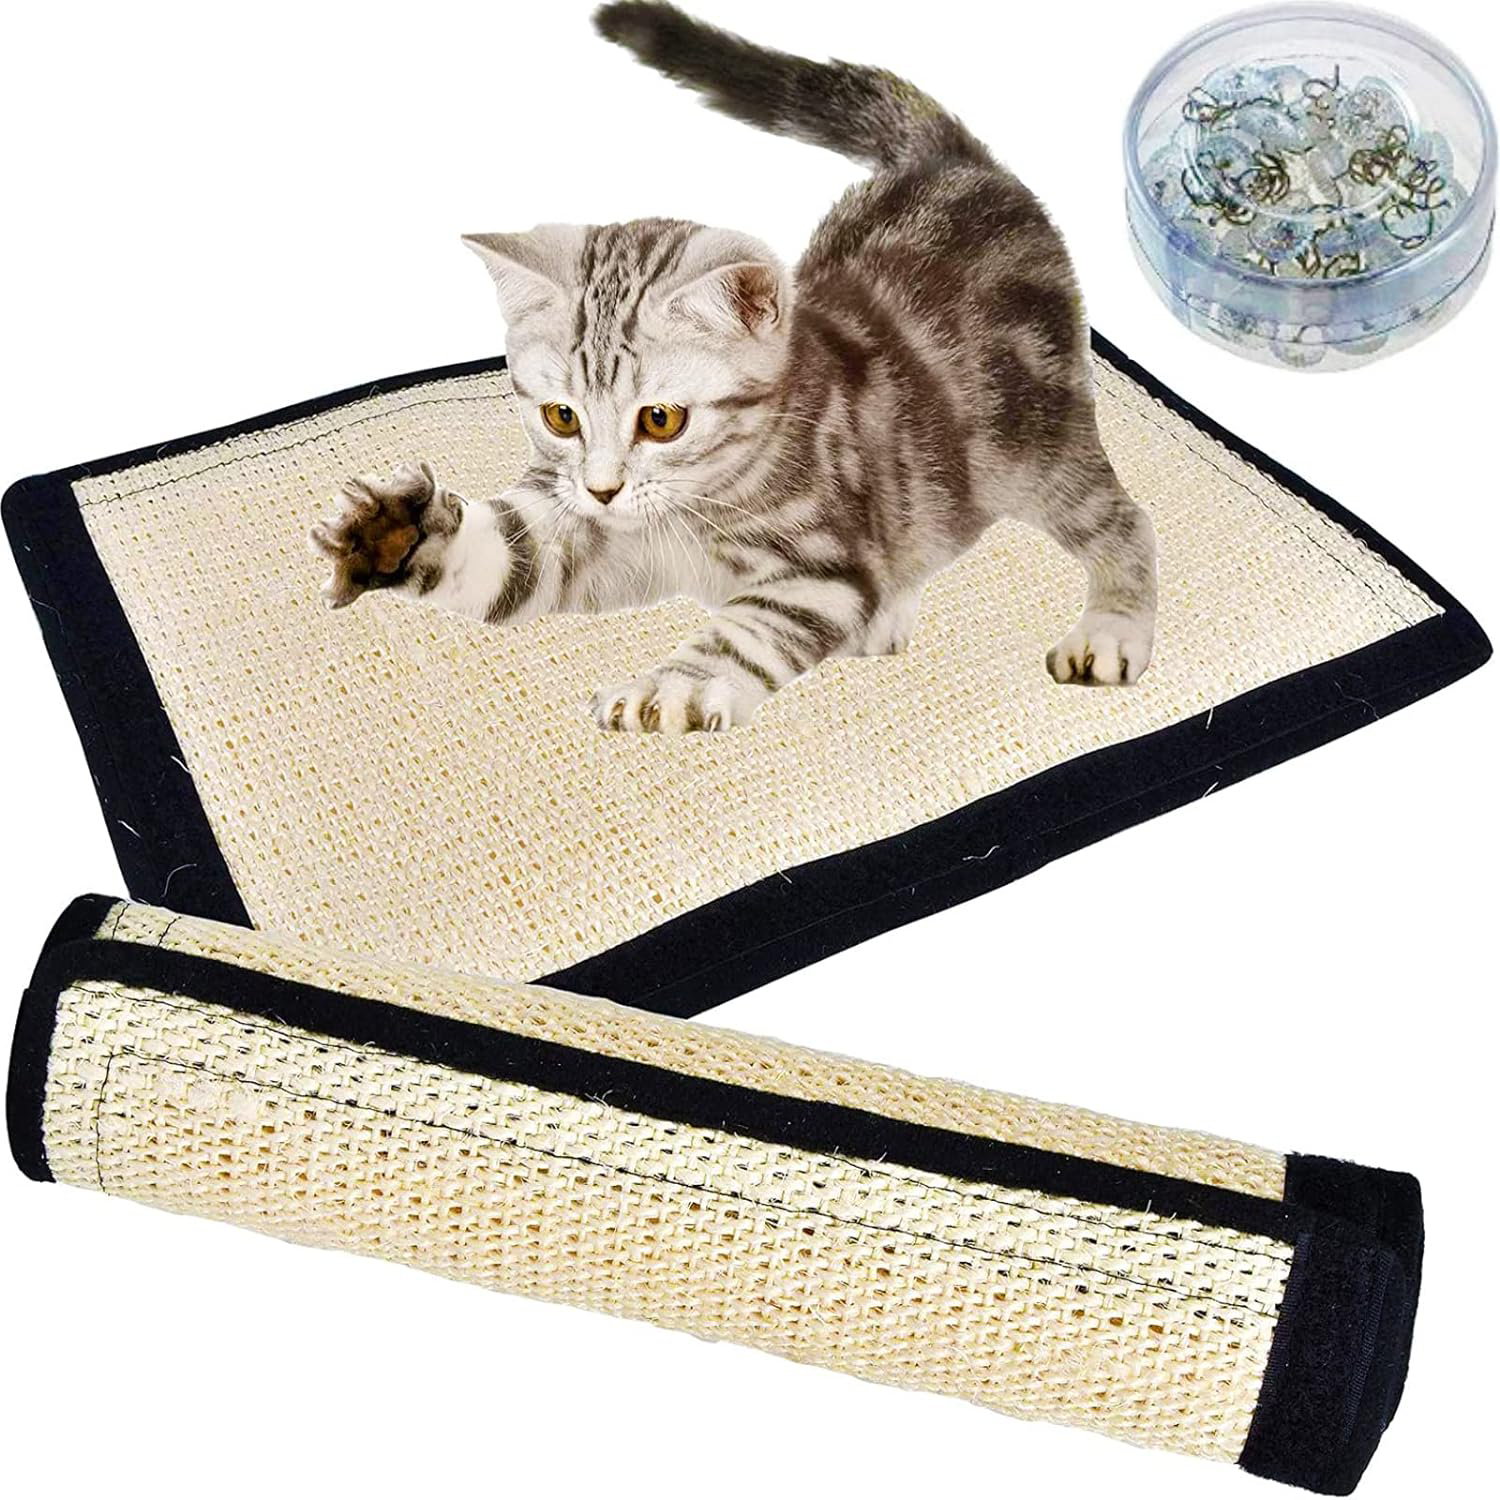 Cat Scratch Pad 2PK, Anti-Scratch Pads for Furniture, Kitty Scratching Bed New